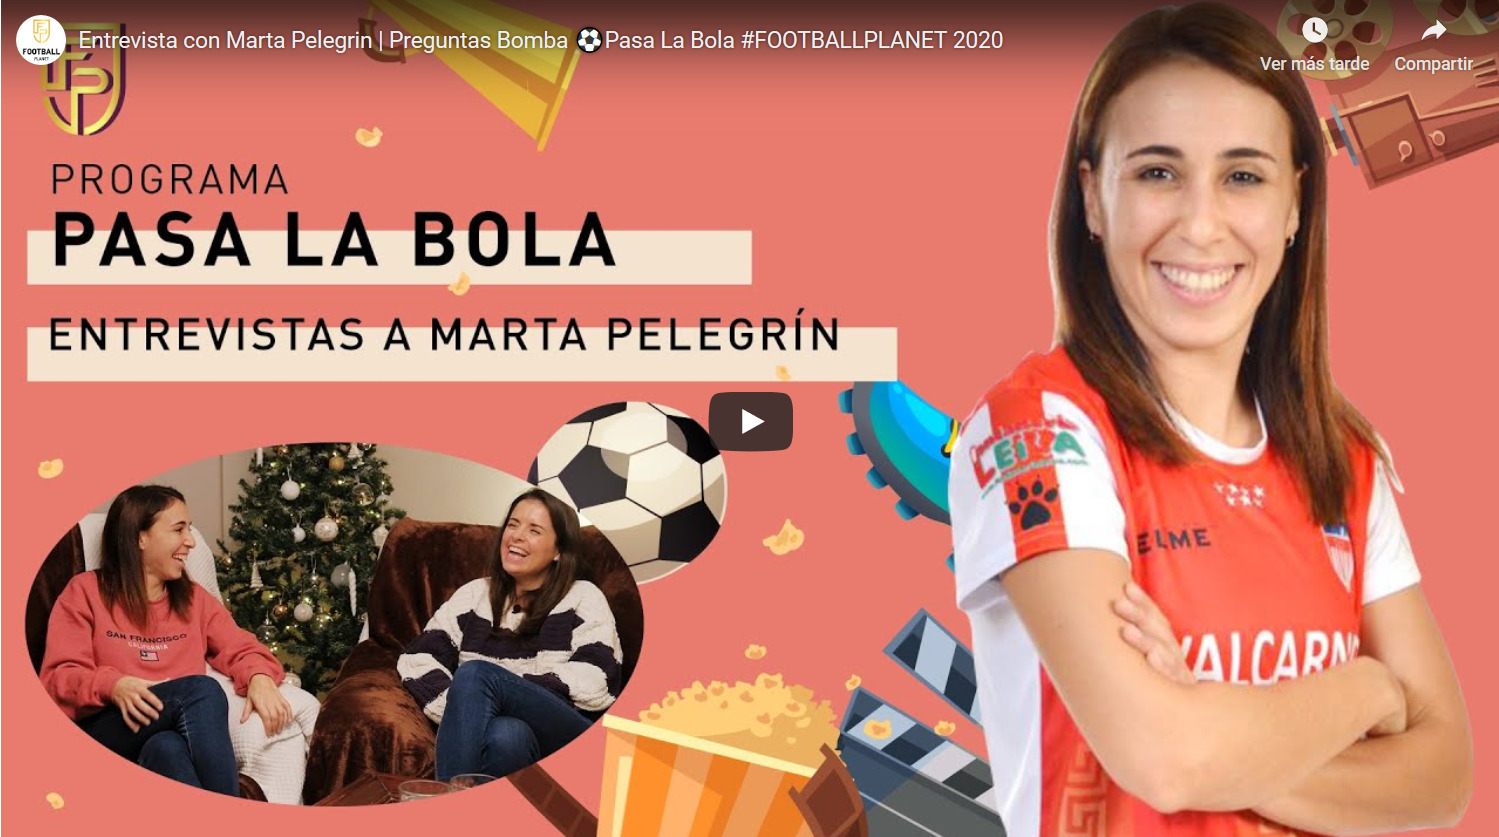 Entrevista a Marta Pelegrín en el espacio "Pasa la Bola" del Canal Football Planet